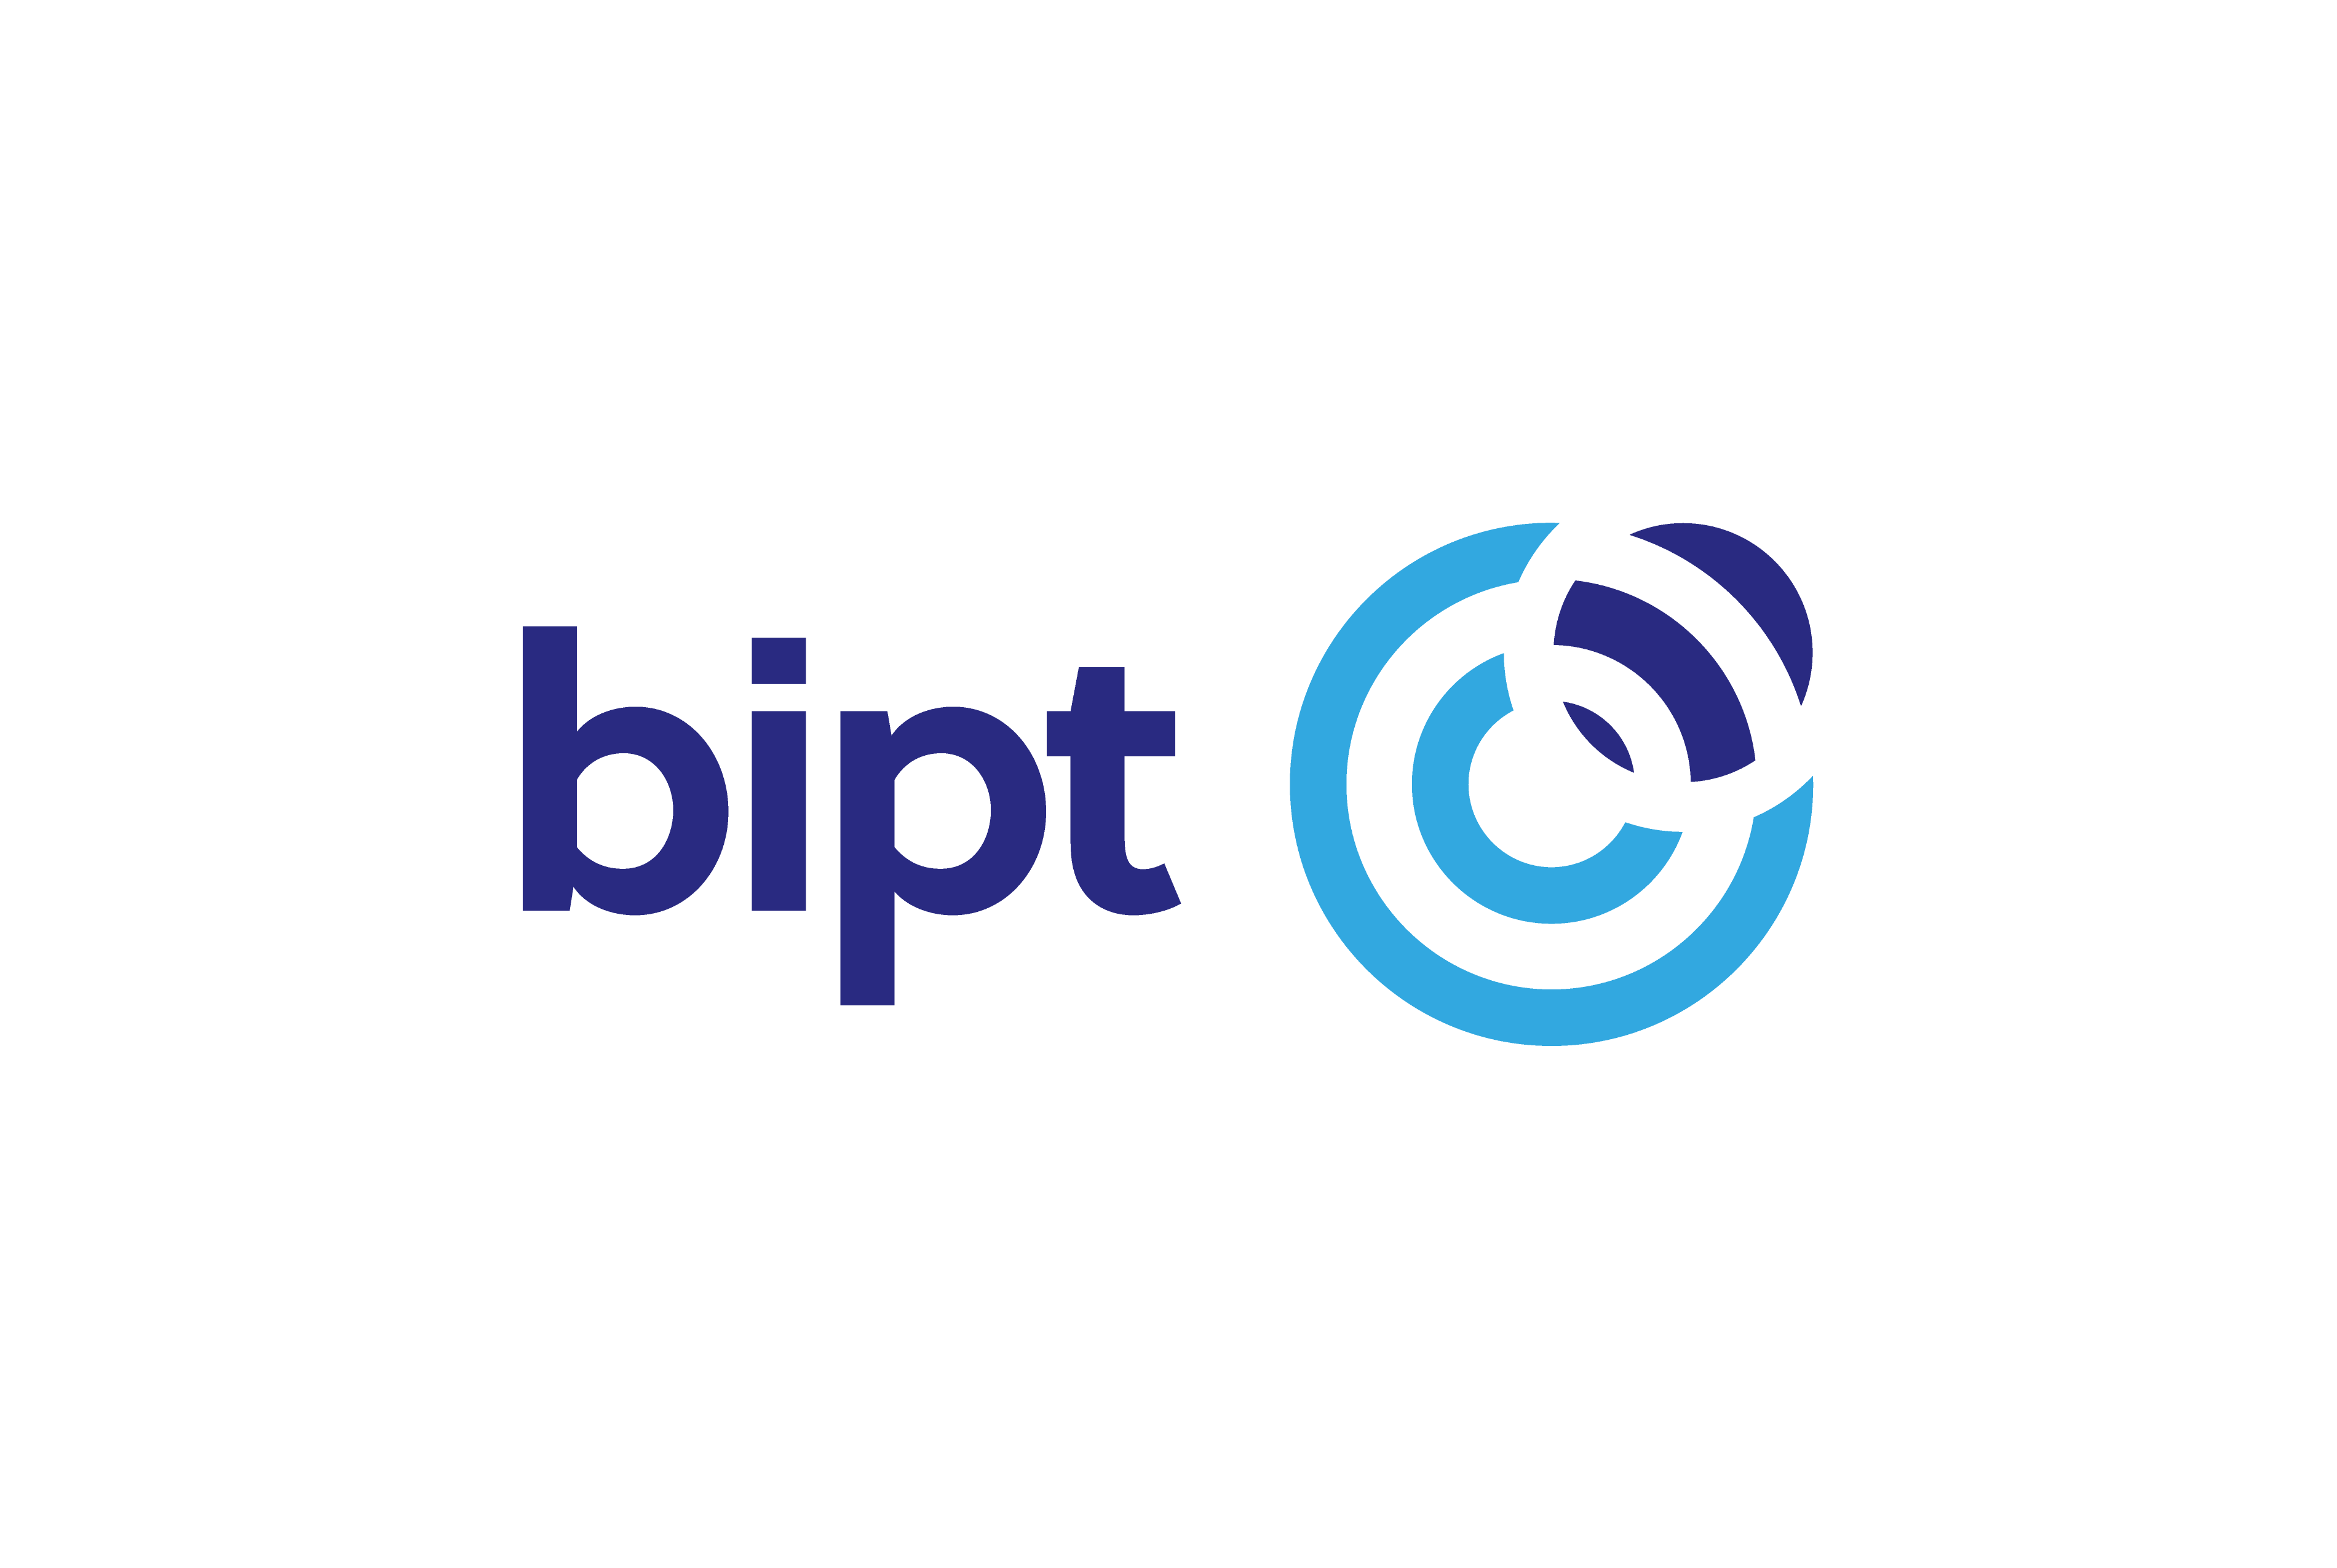 The image shows the BIPT logoBelgium